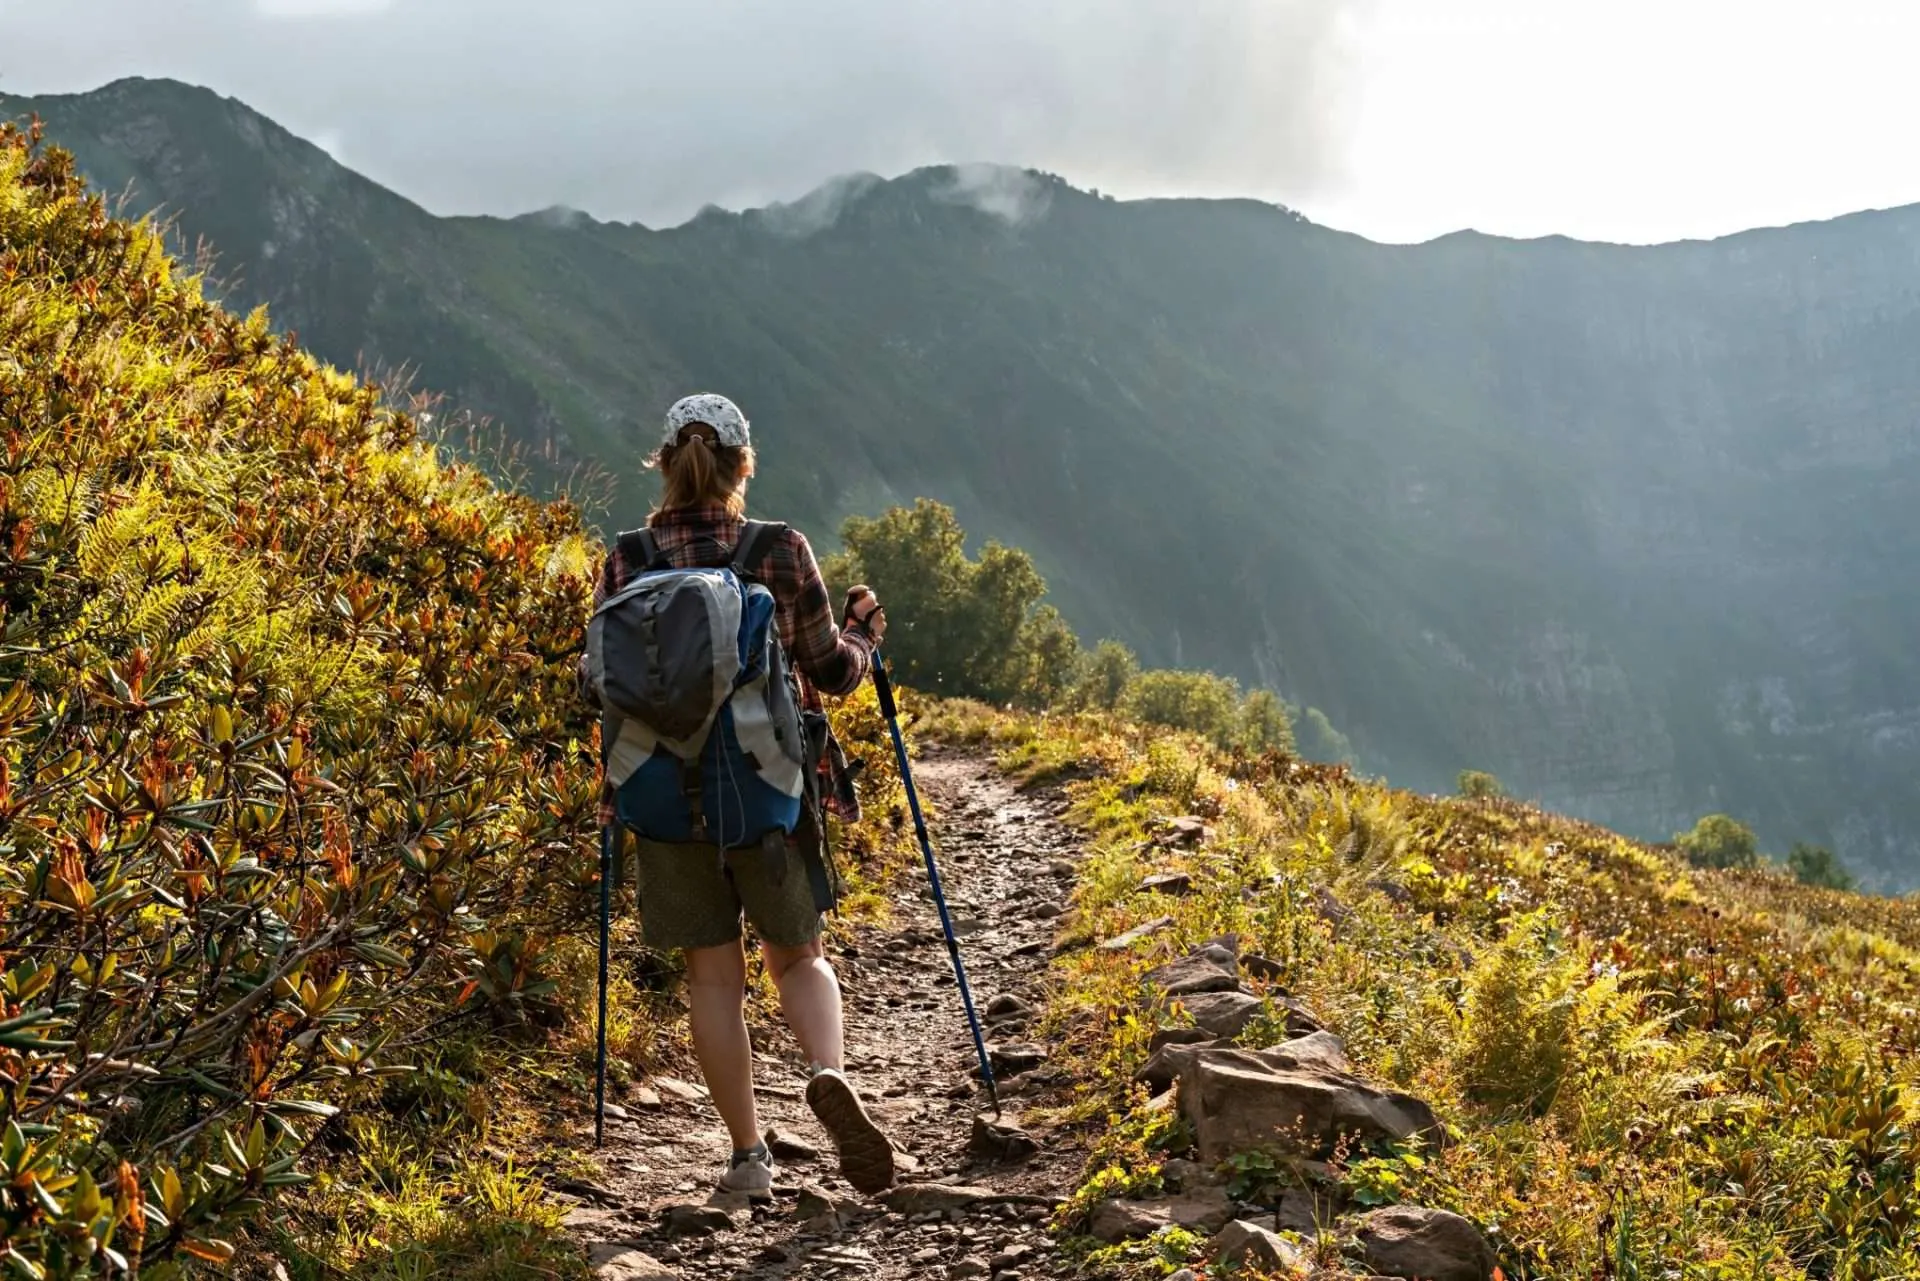 Woman hiking with walking sticks through scenic mountains.